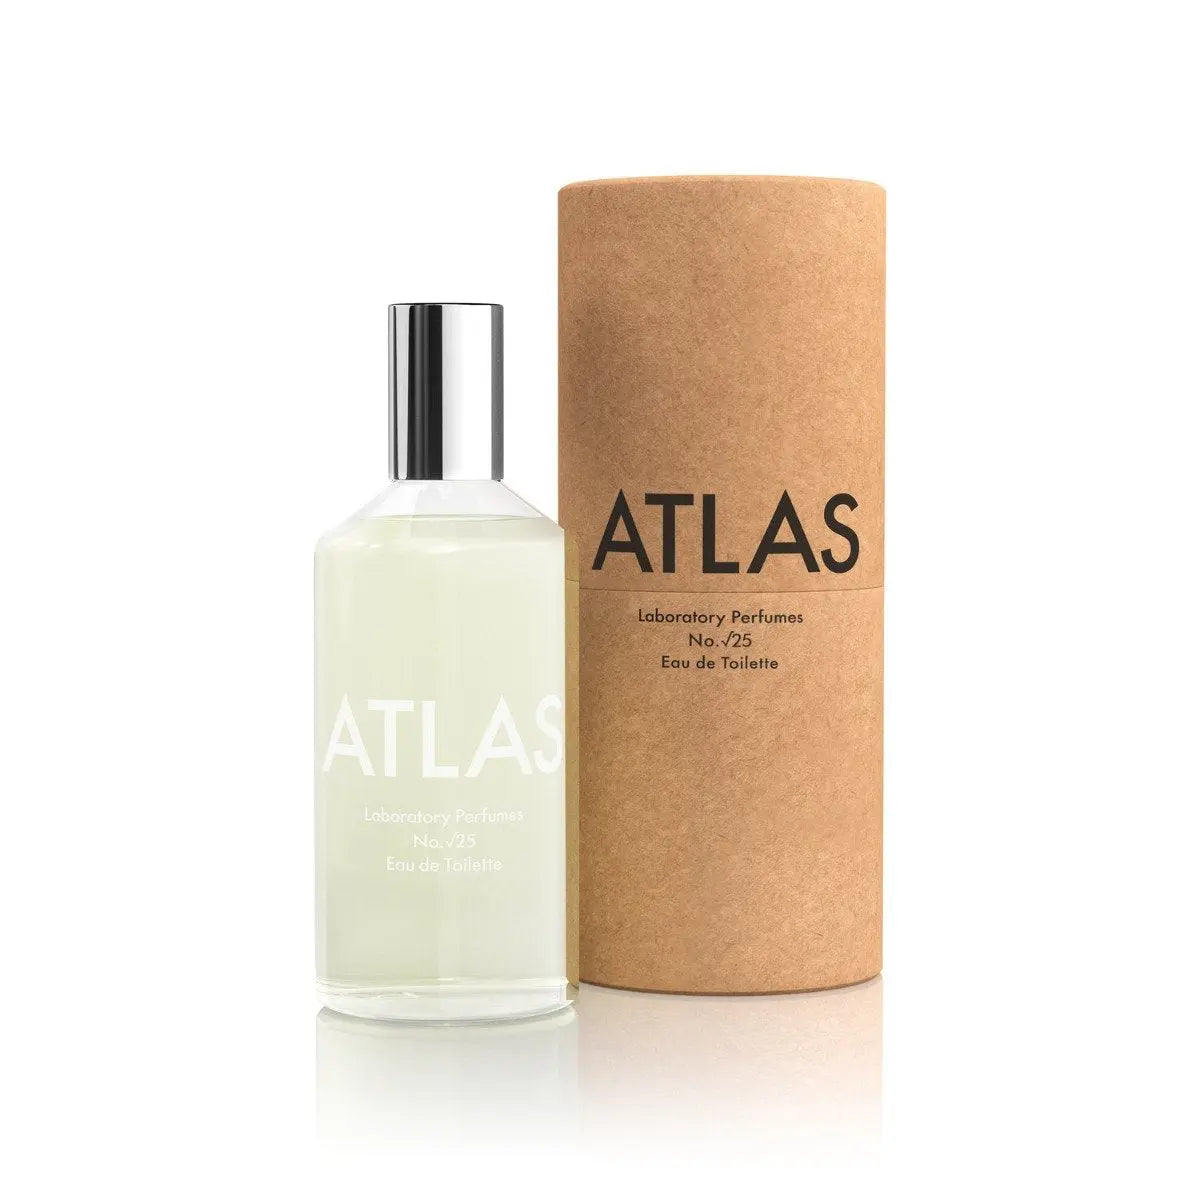 Atlas Eau De Toilette (100ml)  Laboratory Perfumes   